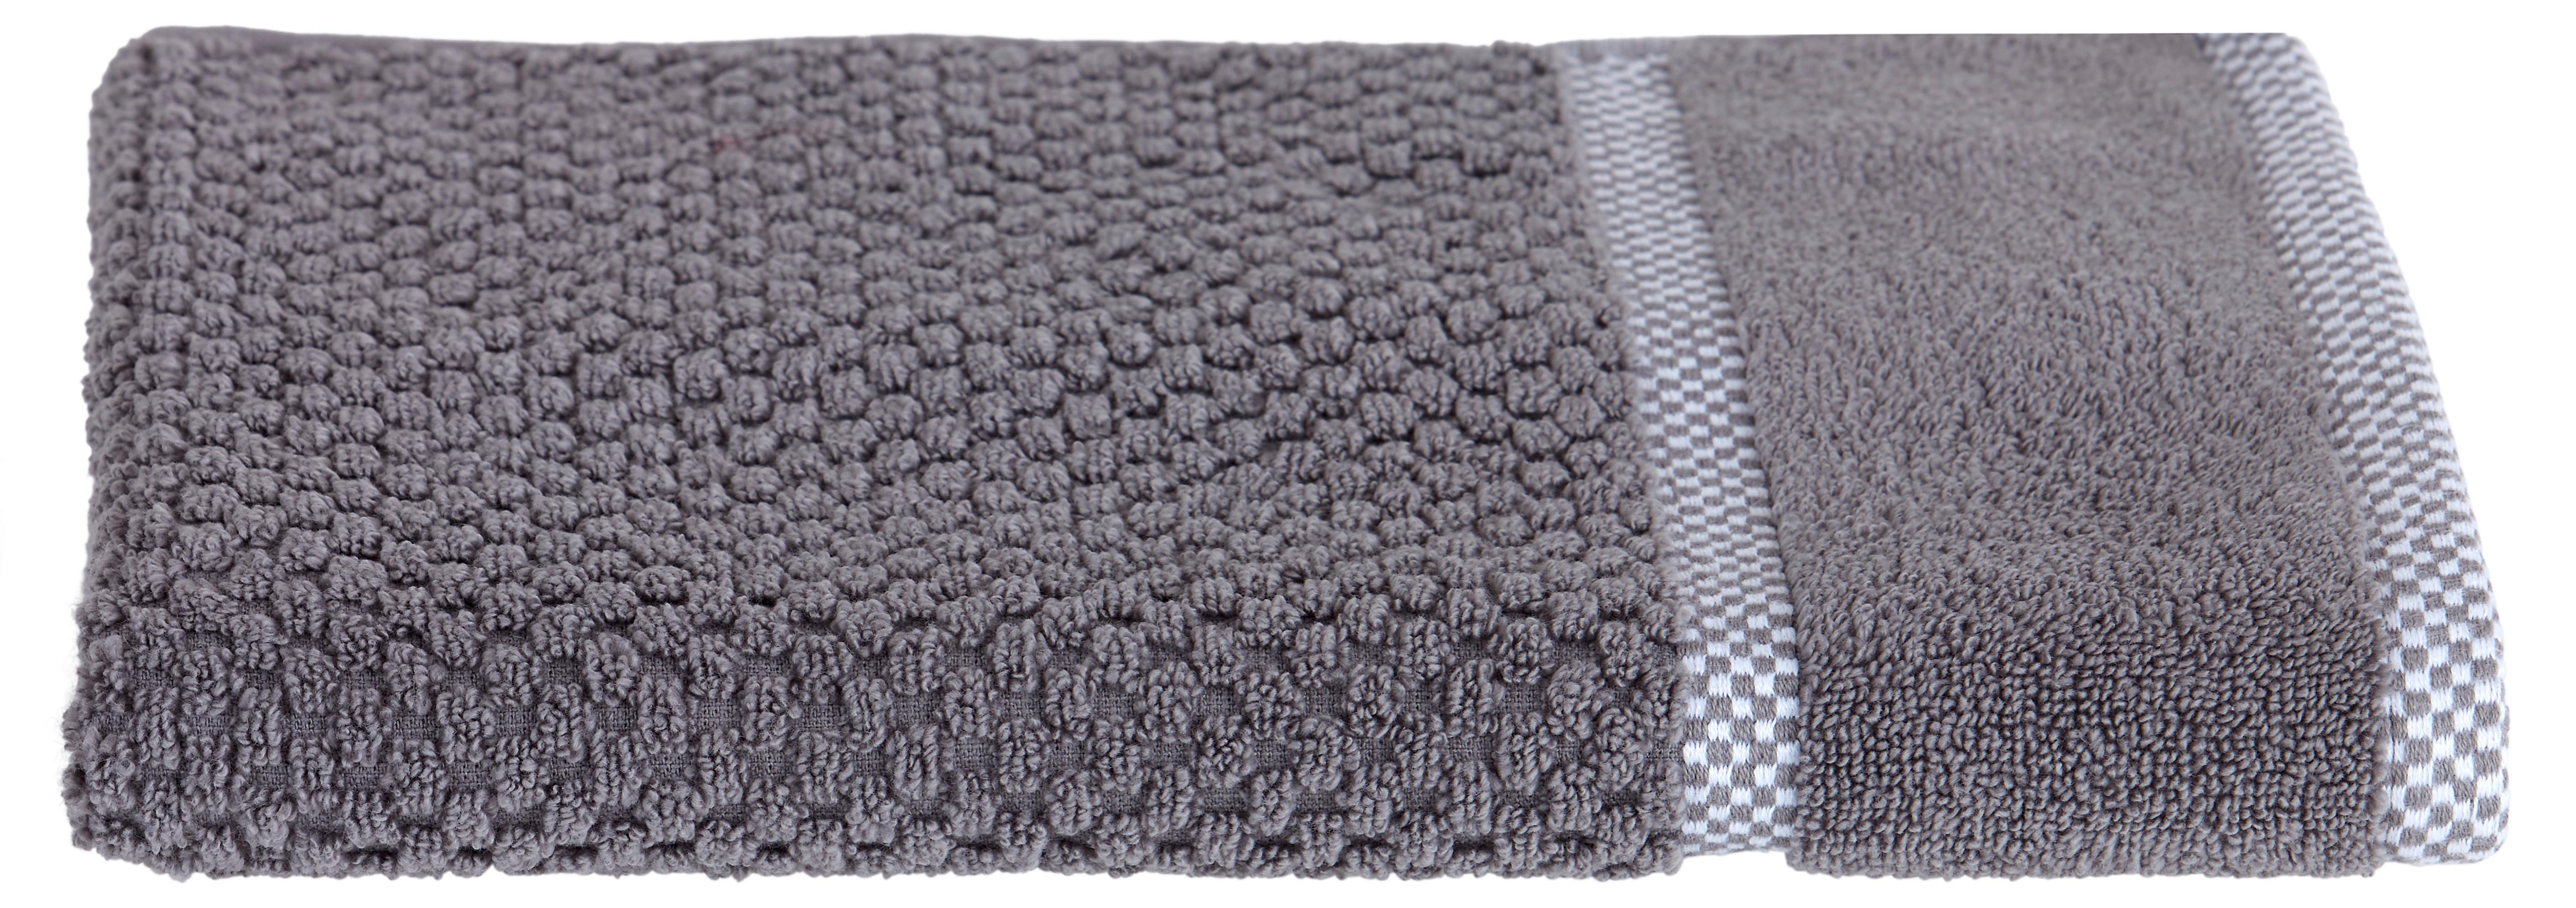 Handtuch Rocky Baumwolle 500 G/M2 Grau 50x100 cm - Grau, ROMANTIK / LANDHAUS, Textil (50/100cm) - James Wood